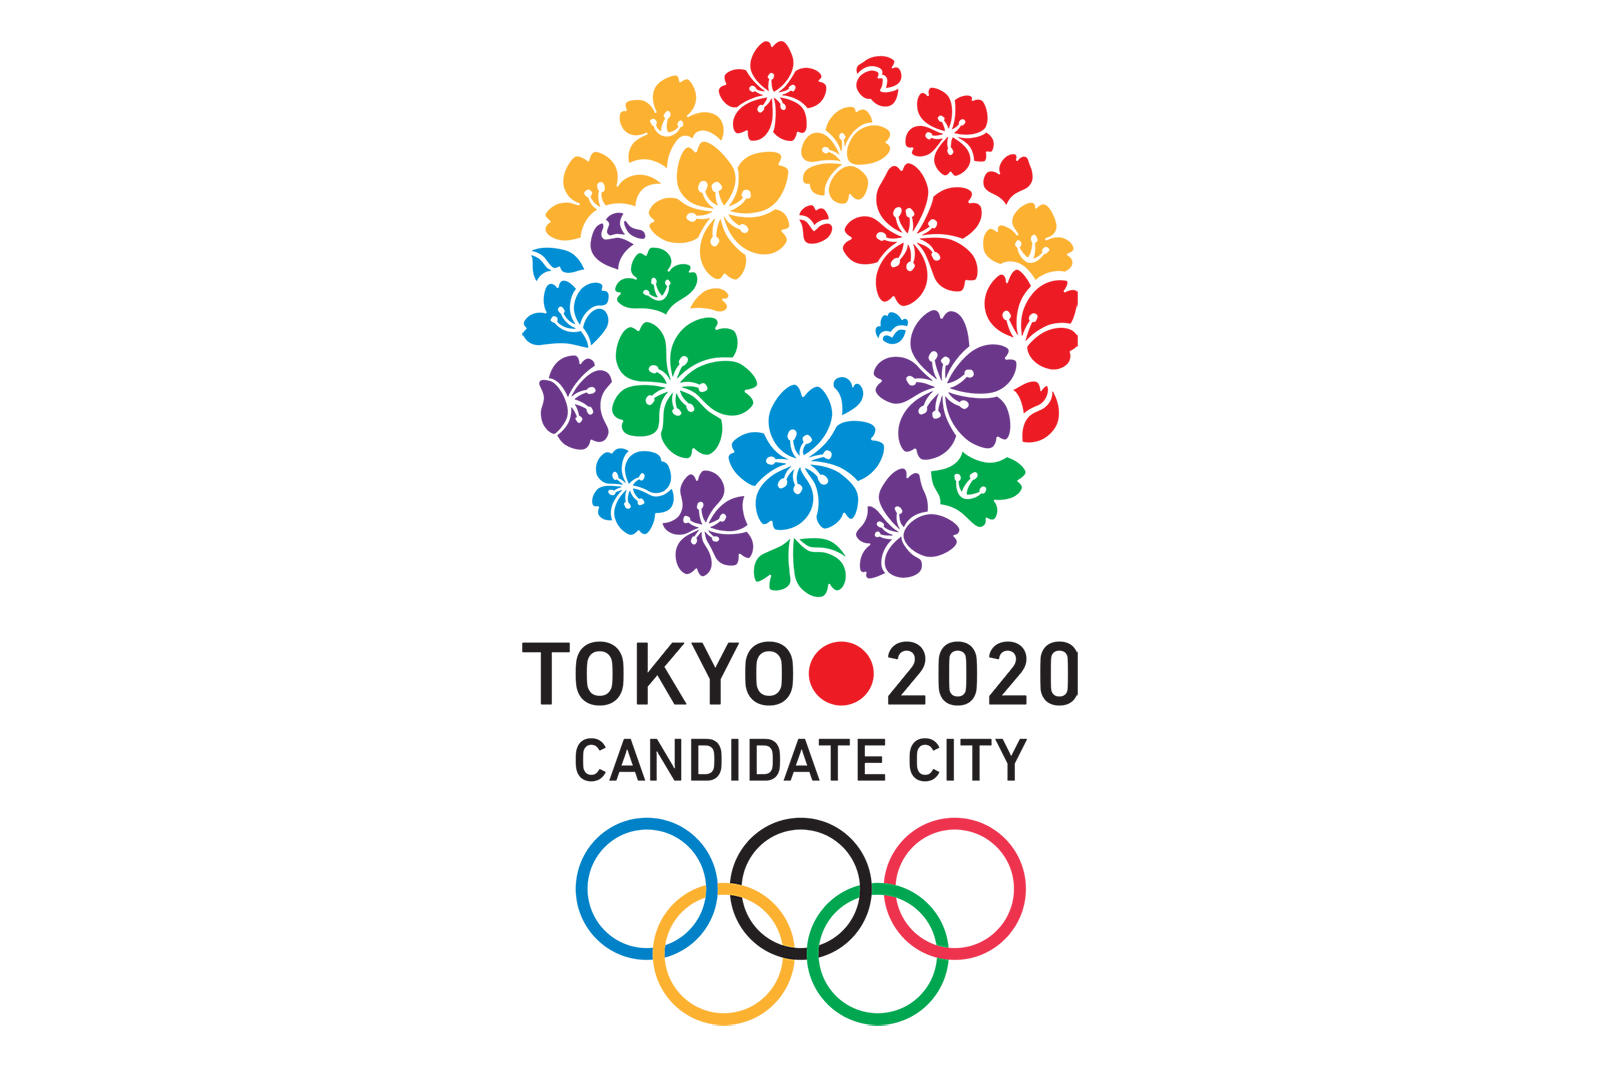 Tokyo_2020_Olympic_logo